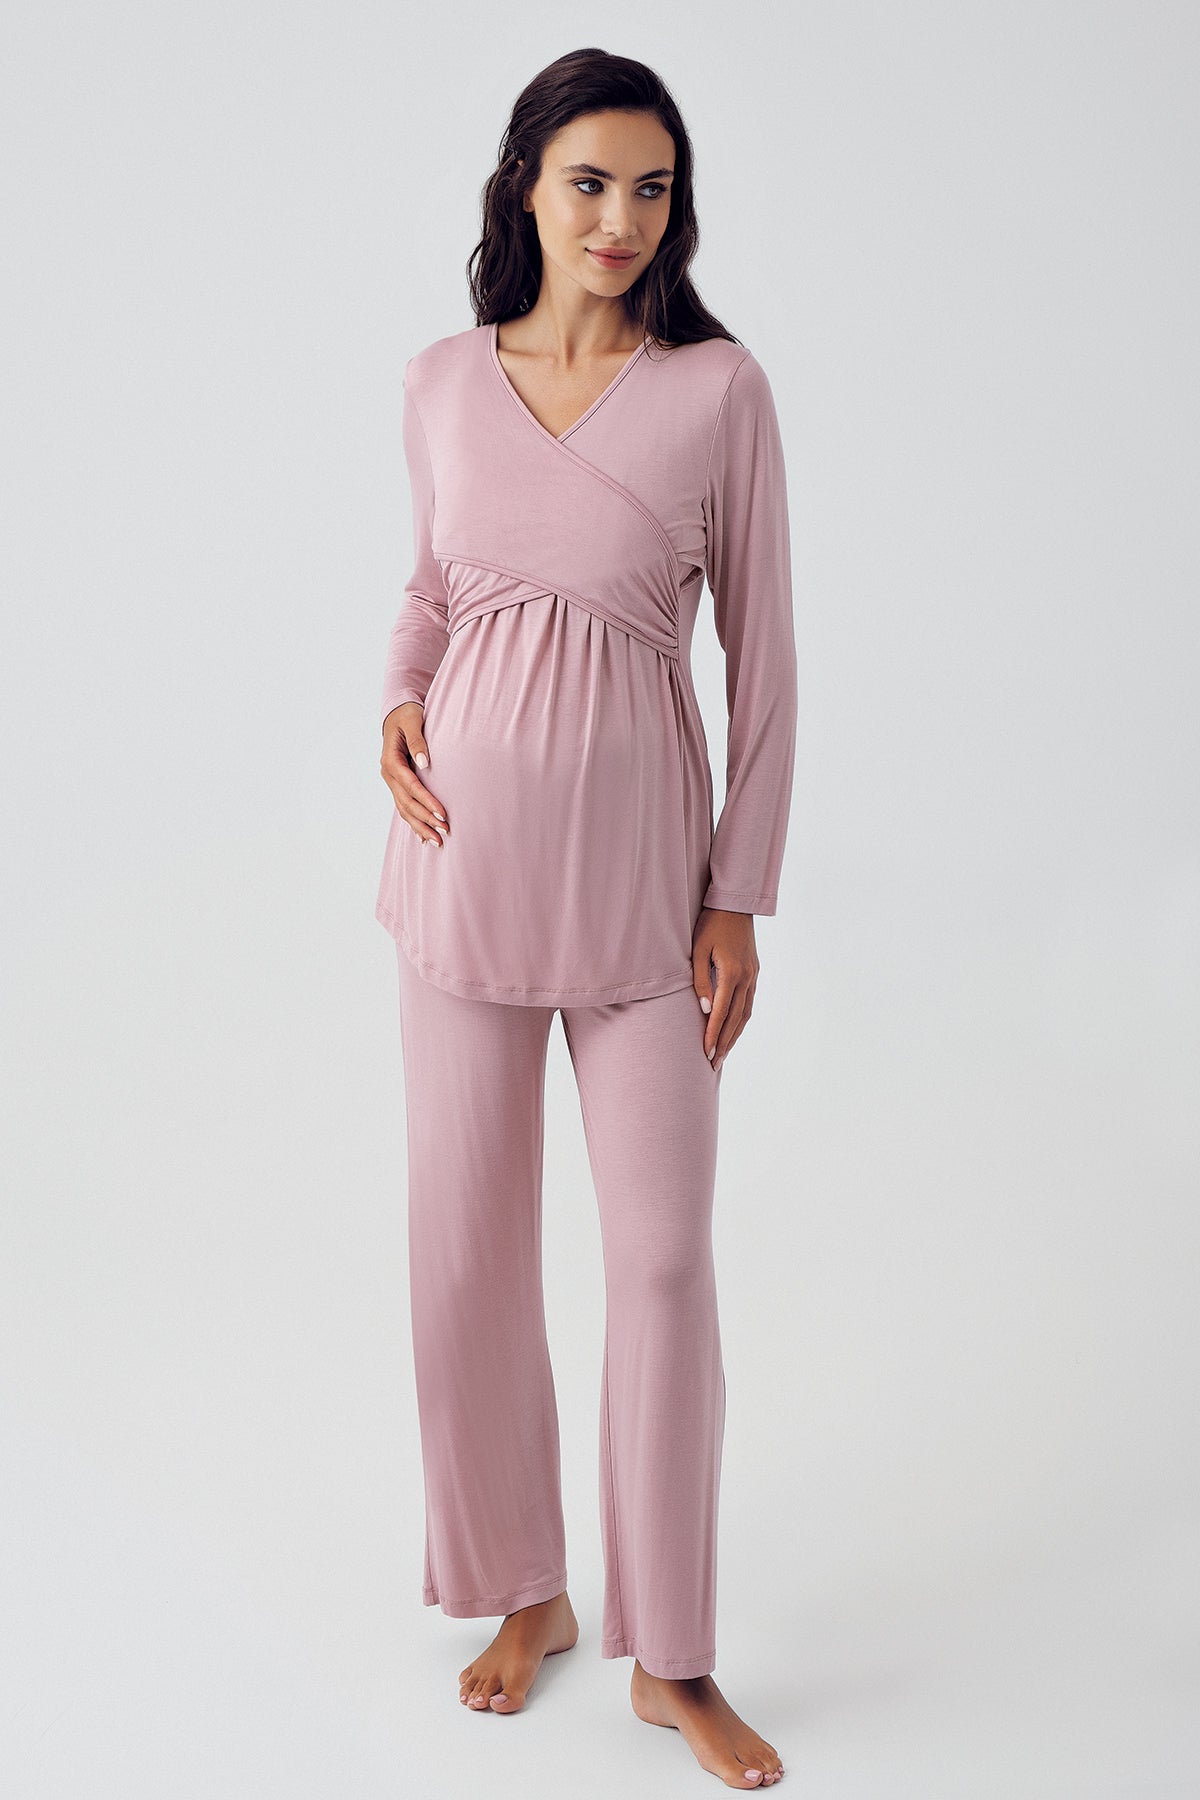 Shopymommy 15205 Cross Double Breasted Maternity & Nursing Pajamas Powder